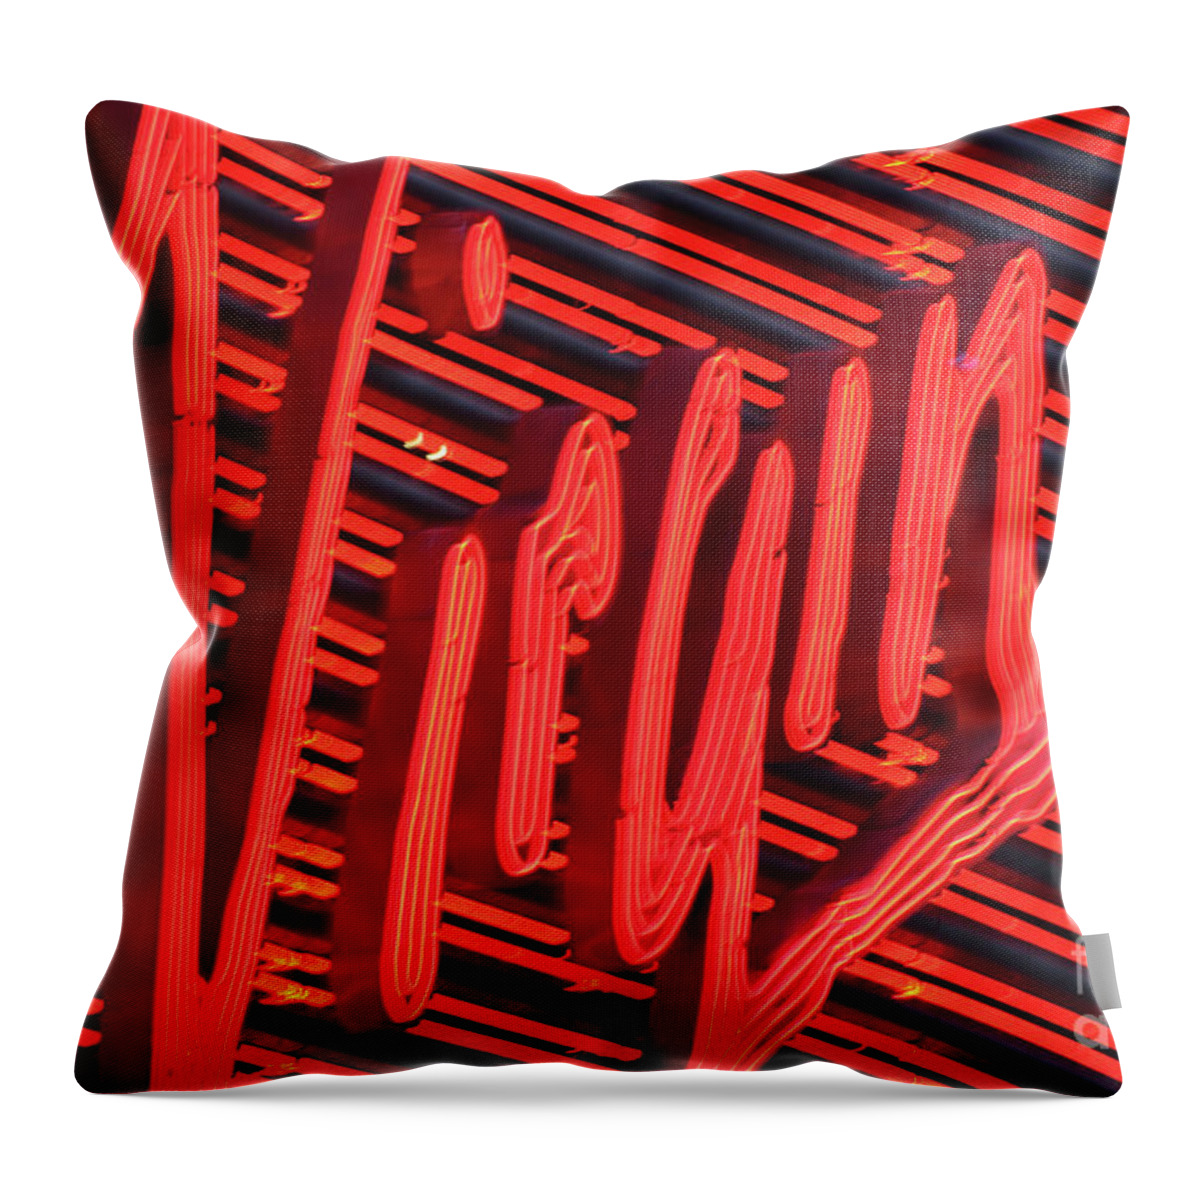  Virgin Record Store Throw Pillow featuring the photograph Virgin Neon Sign by Steven Spak